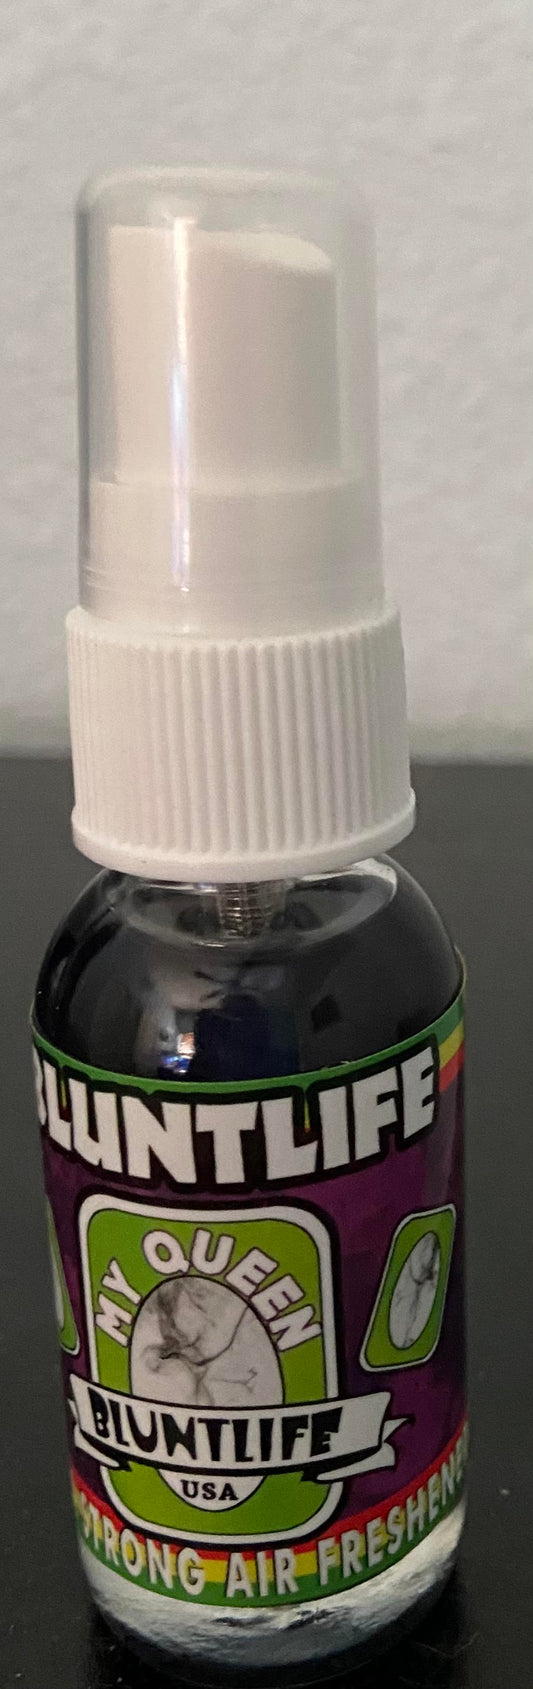 BluntLife Air Freshener Spray 1.0 oz. Bottle Long Lasting - Choose Your Scent (MY QUEEN)